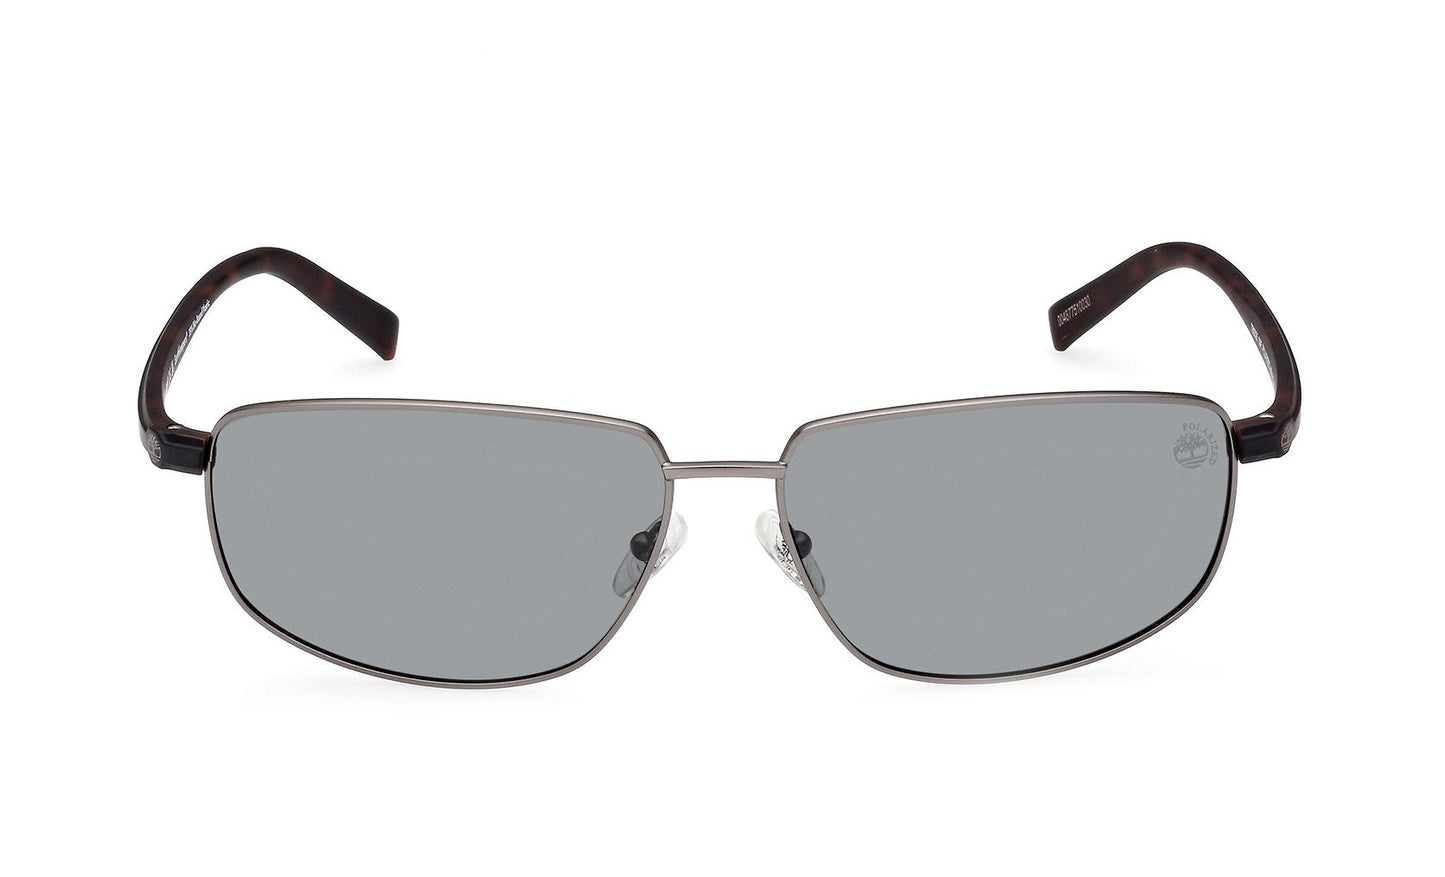 Timberland Sunglasses TB9325 09R